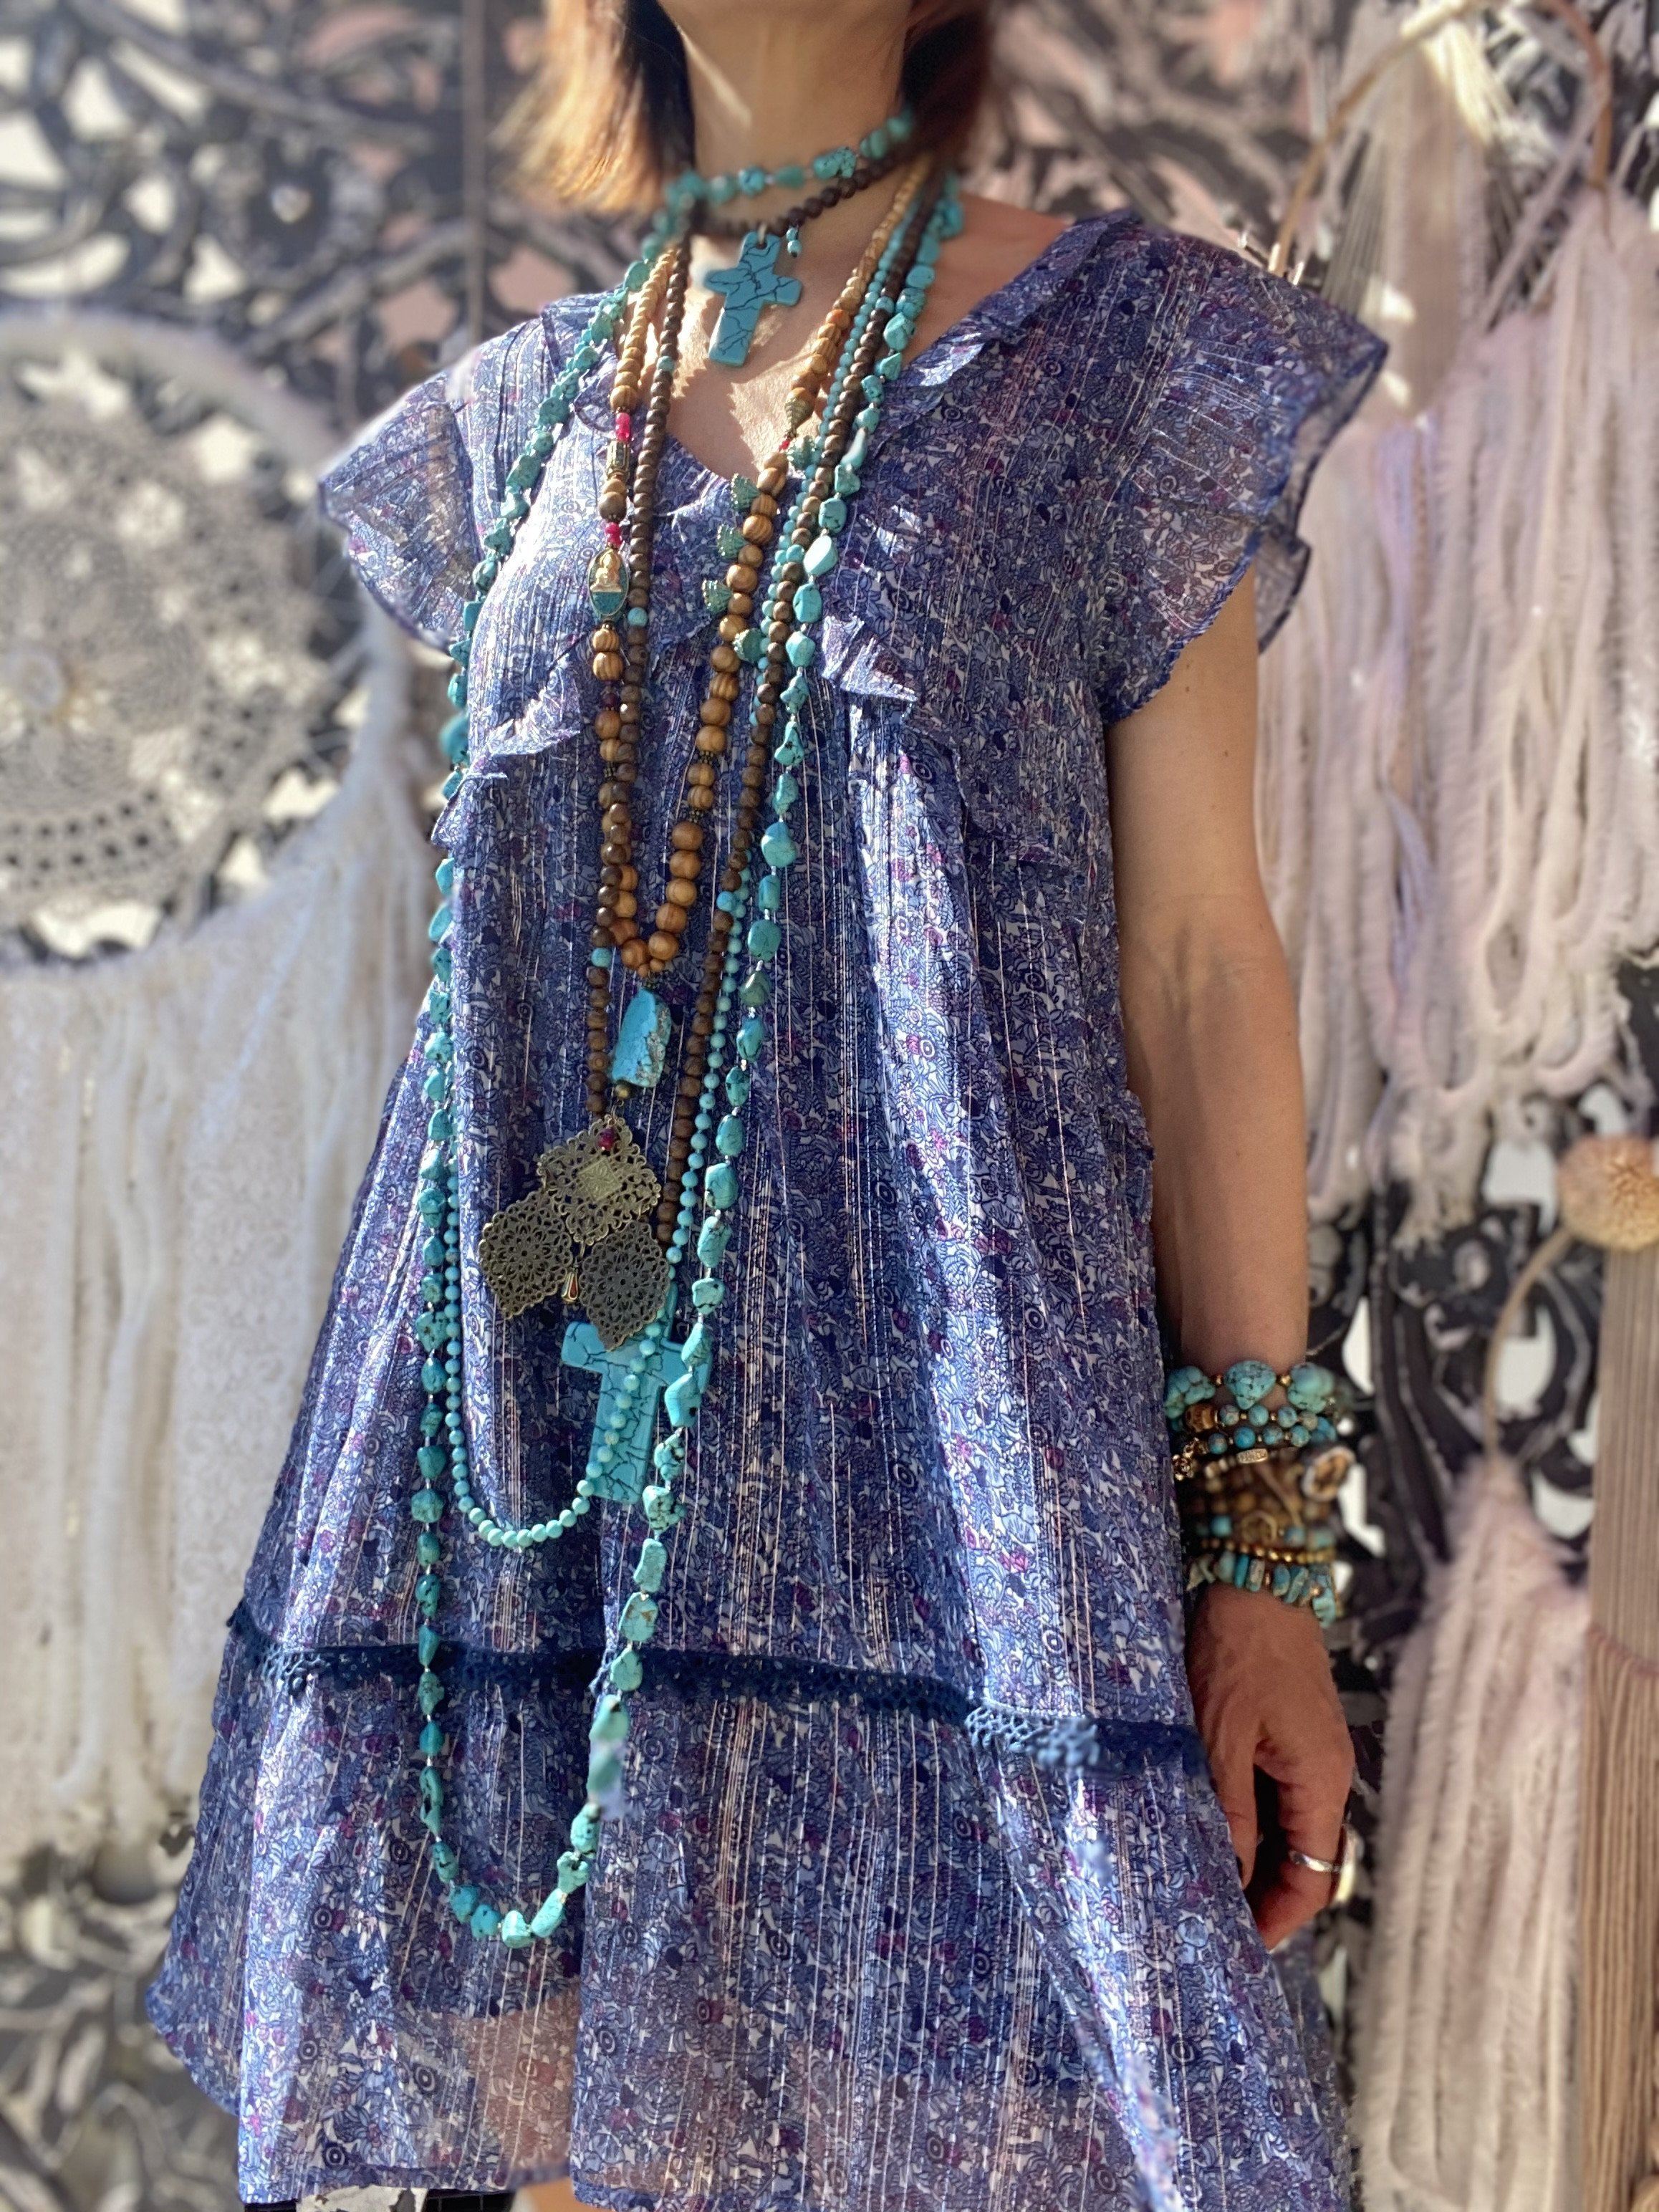 Marigold Blue Wild dress by Amenapih